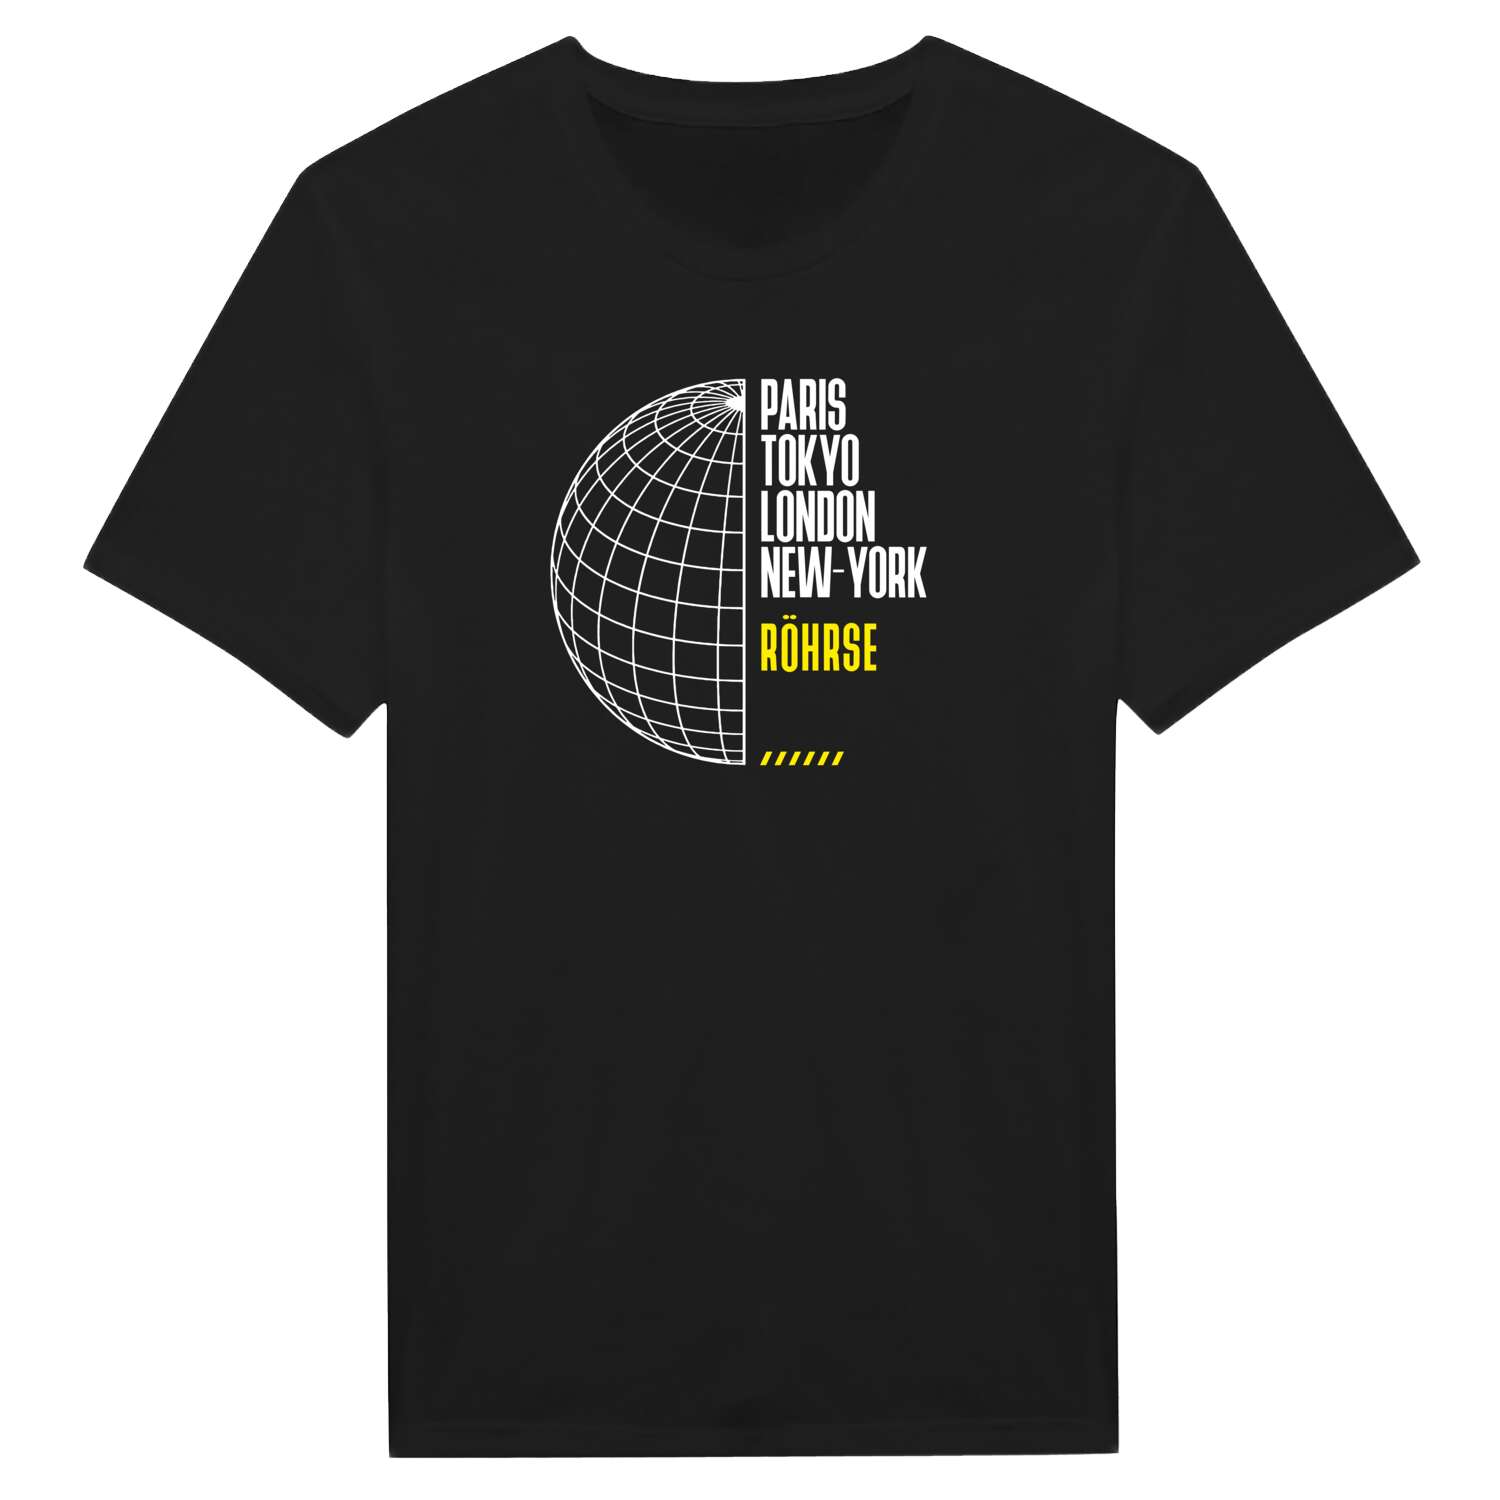 Röhrse T-Shirt »Paris Tokyo London«